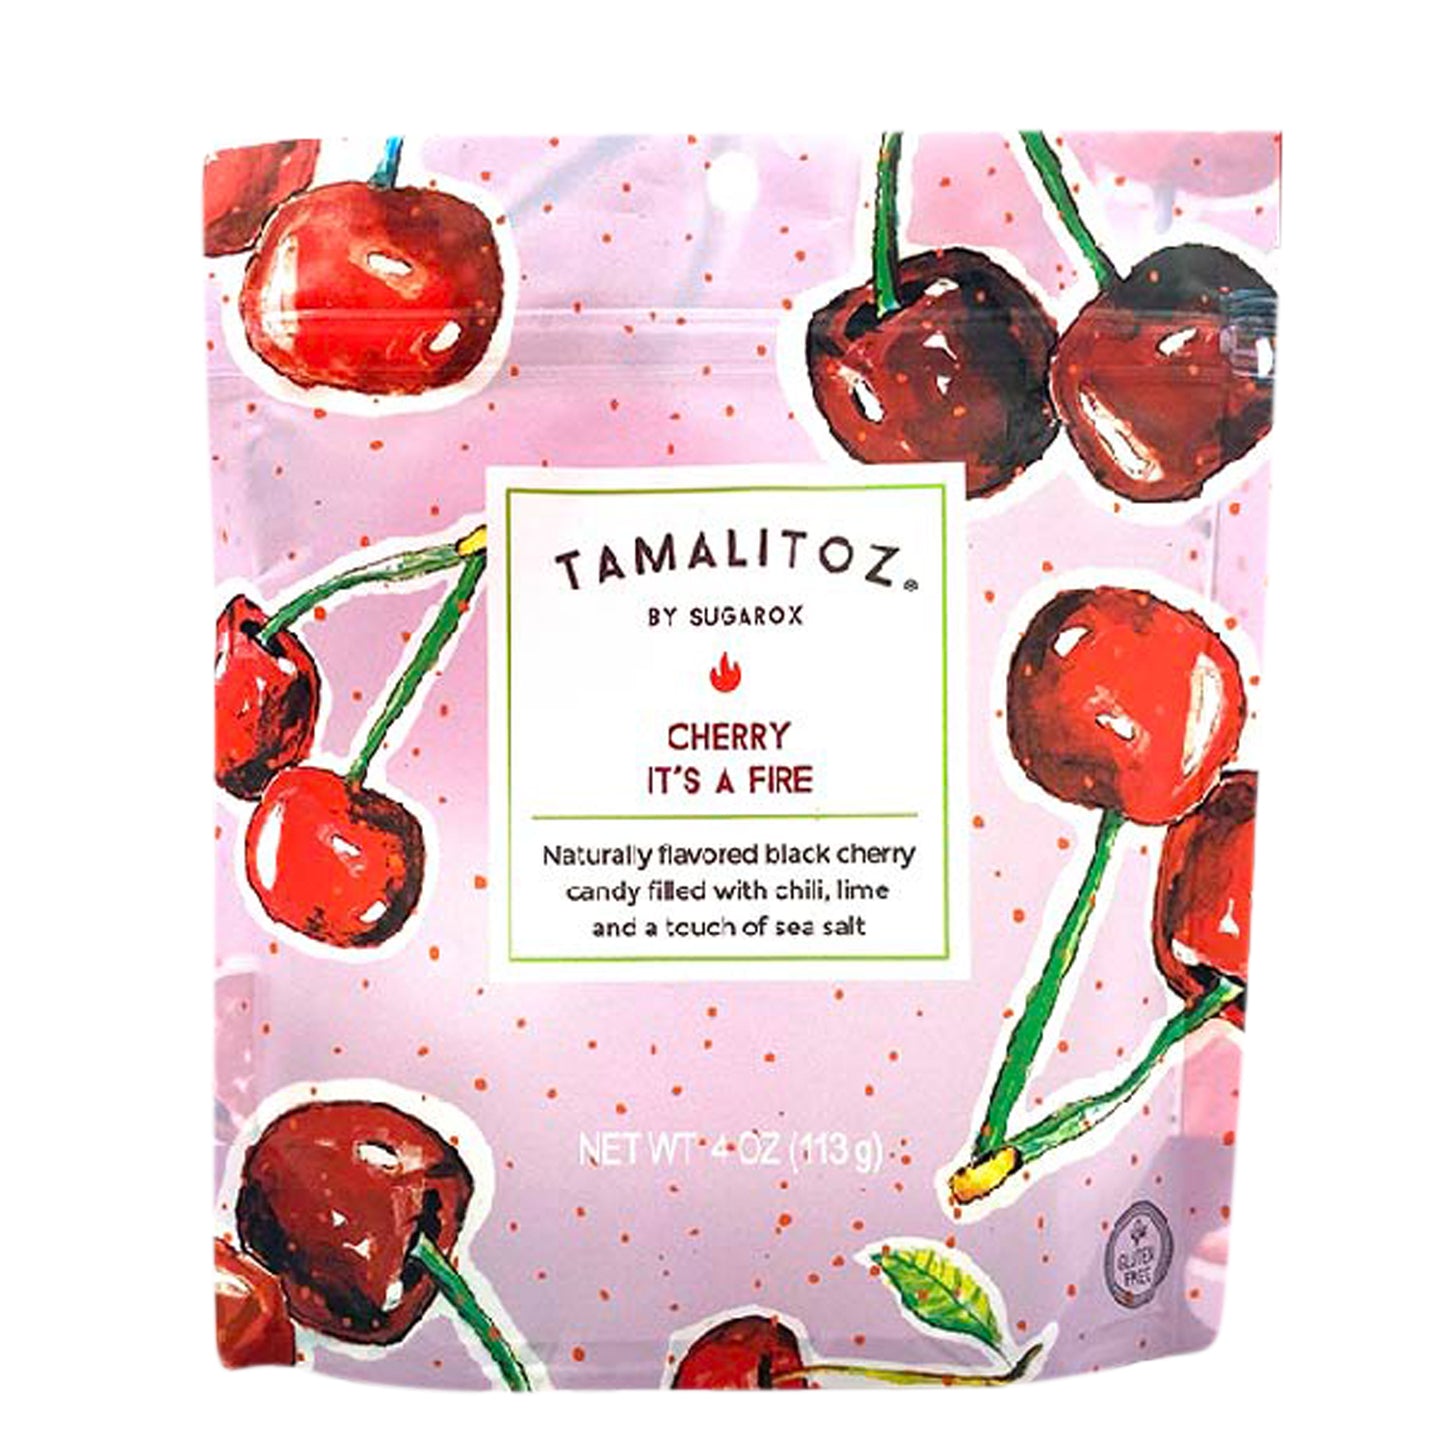 Cherry It’s a Fire Tamalitoz